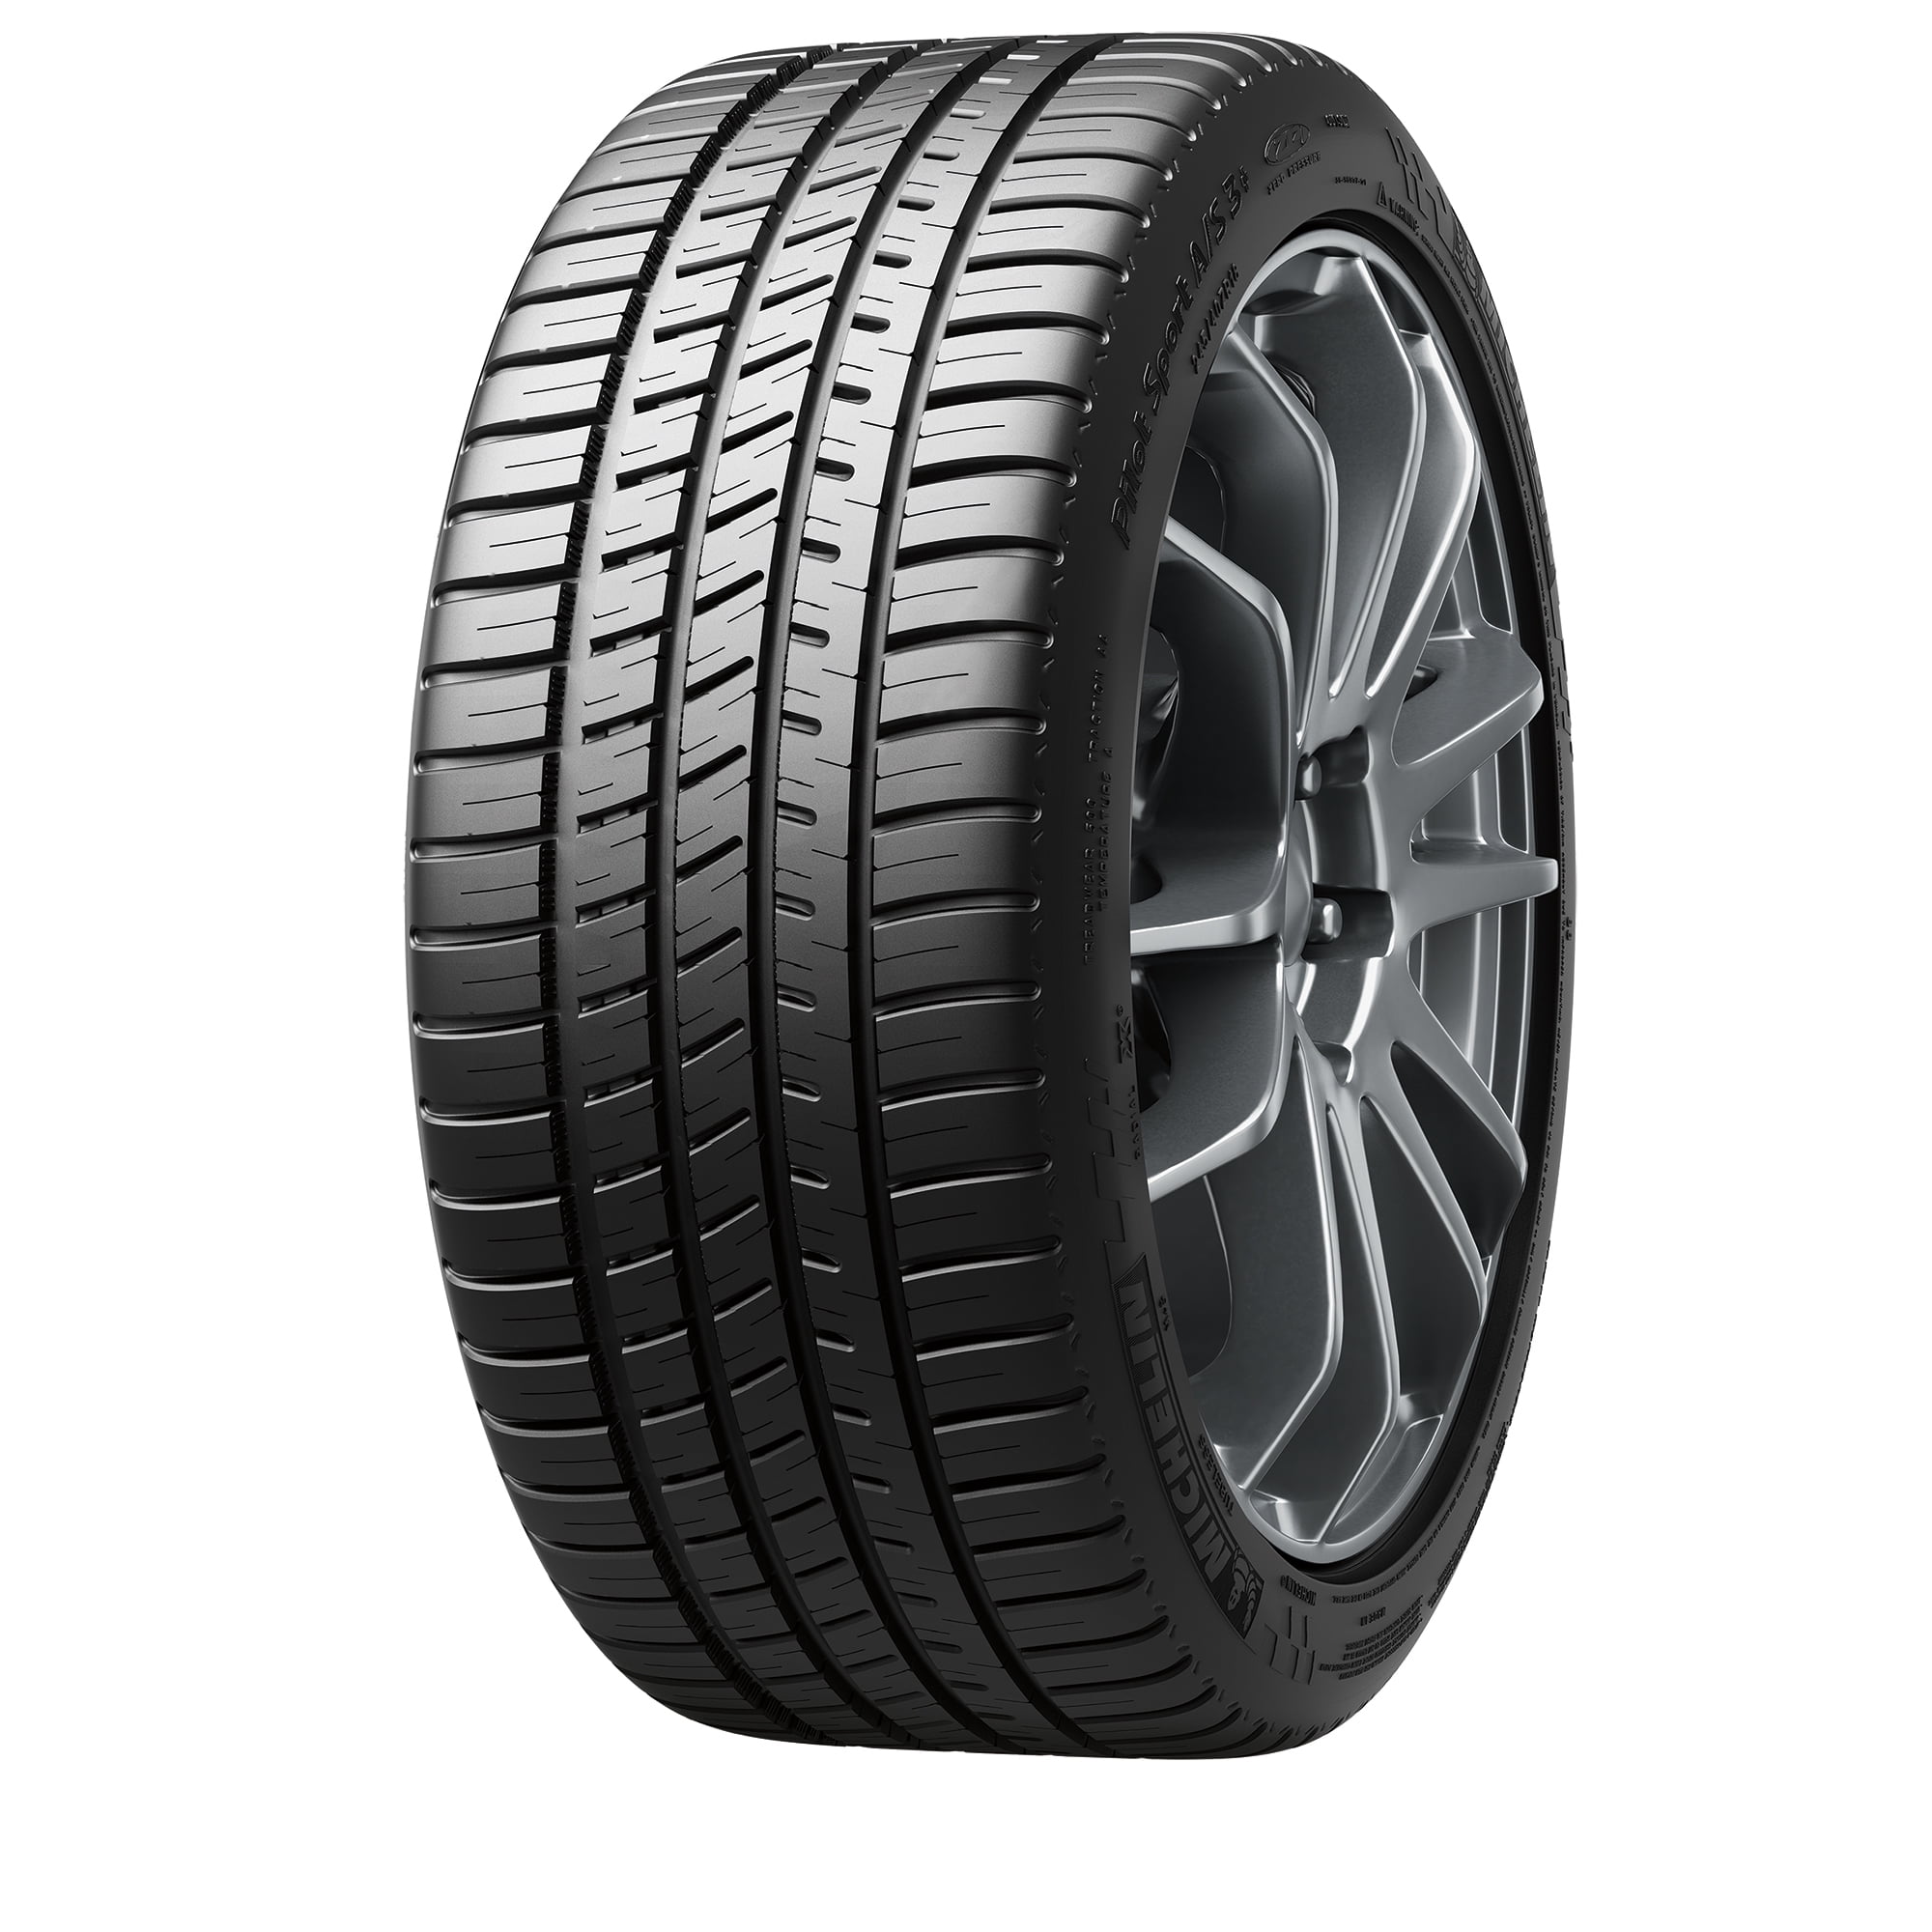 Buy Cheap Michelin Pilot Sport A/S 3+ UHP All Season 275/40ZR18 (99Y) Passenger Tire